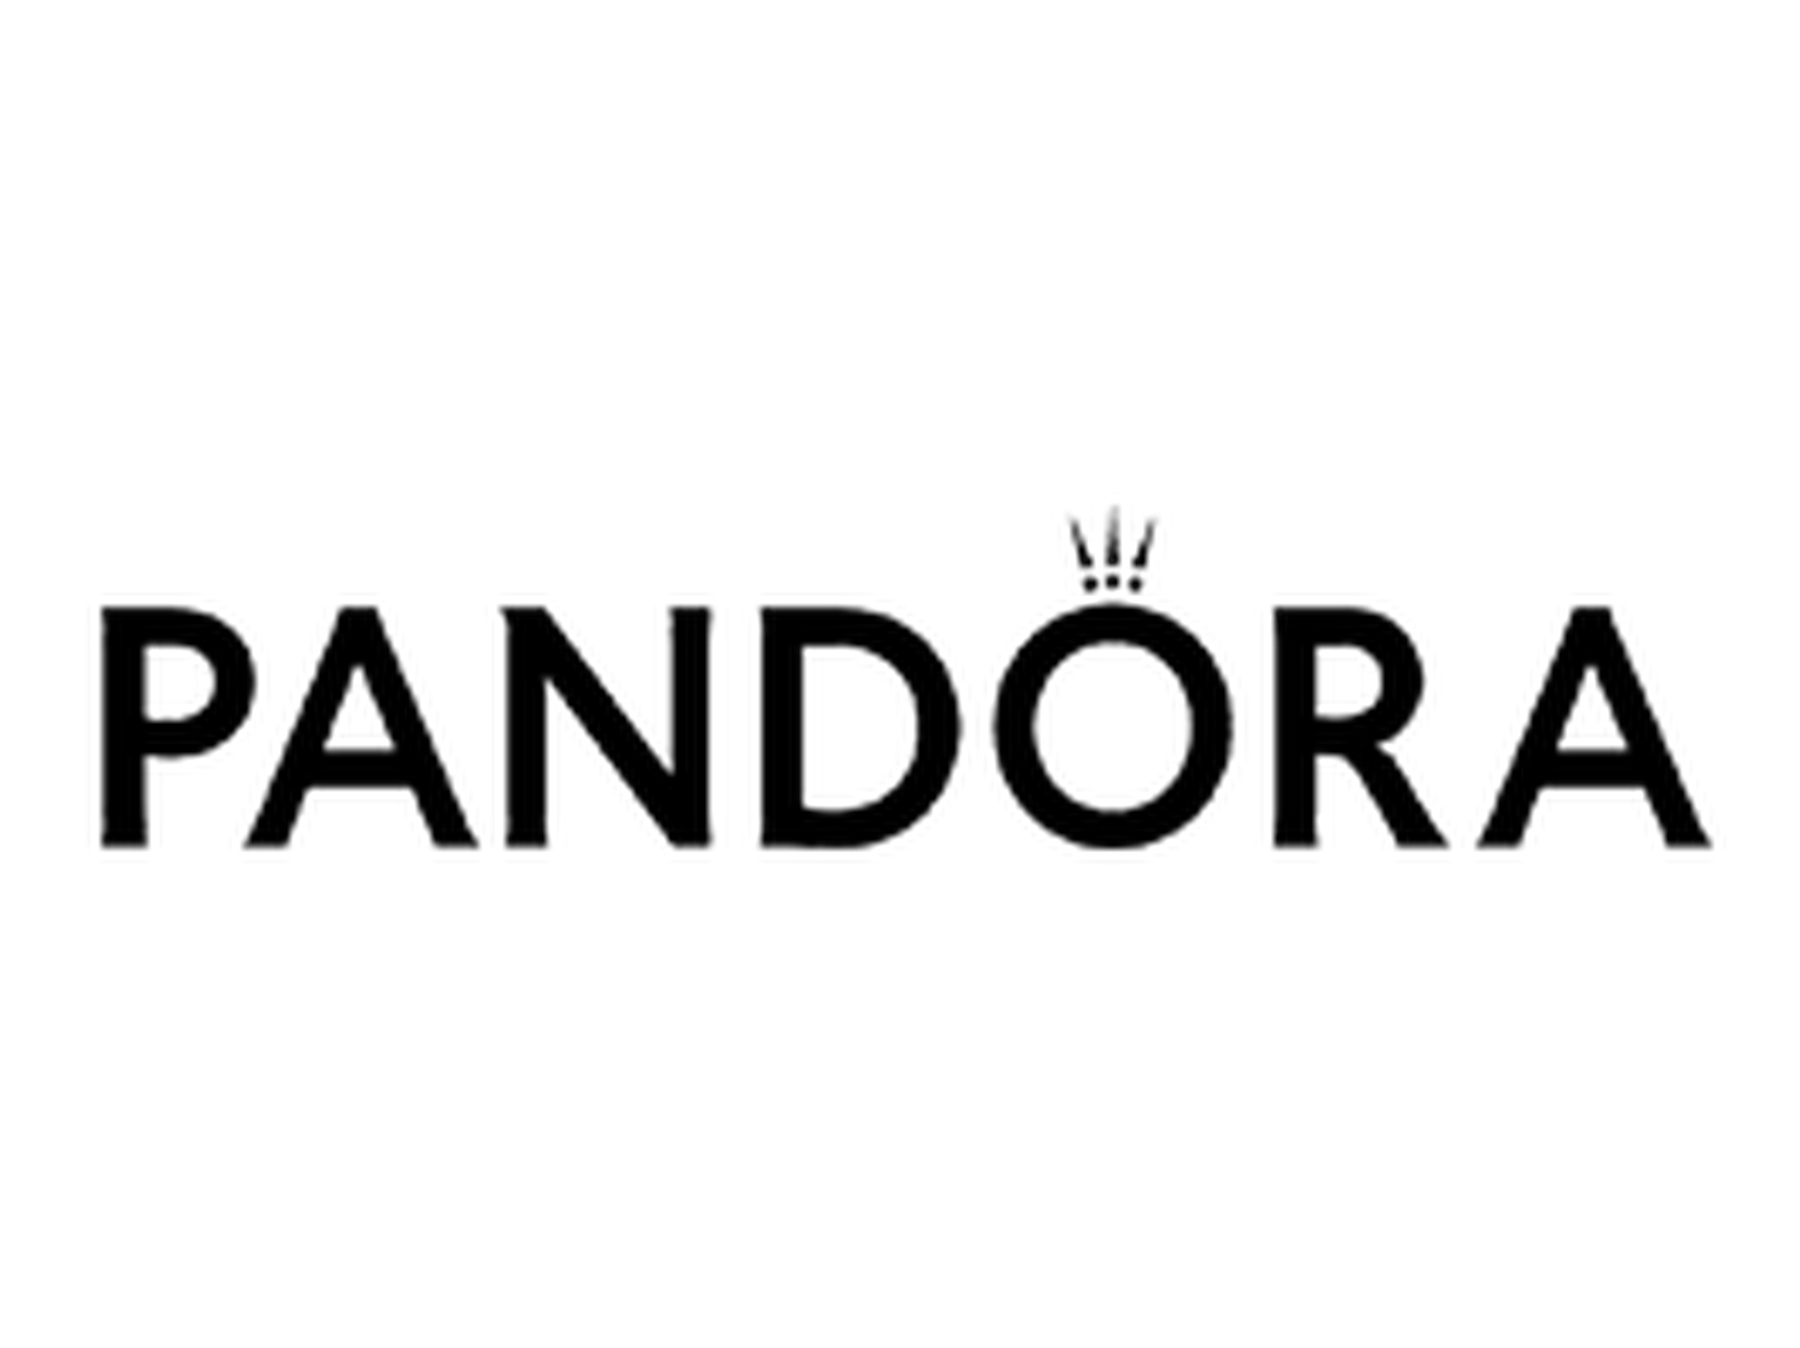 PANDORA kortingscode